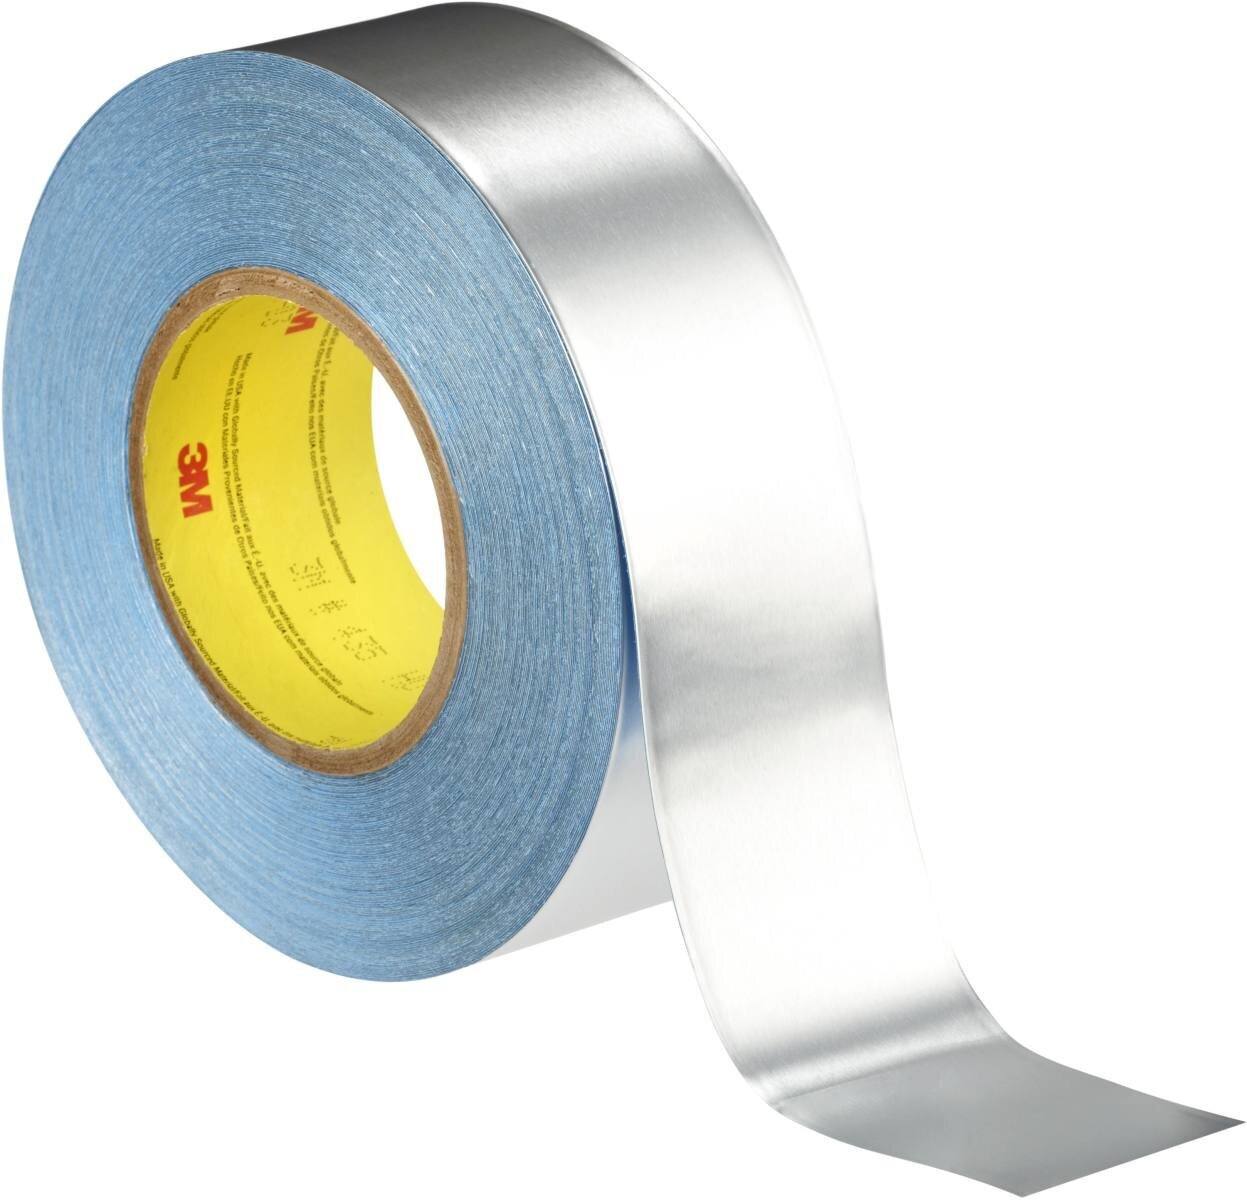 3M metal adhesive tape 435, silver, 50 mm x 33 m, 0.33 mm